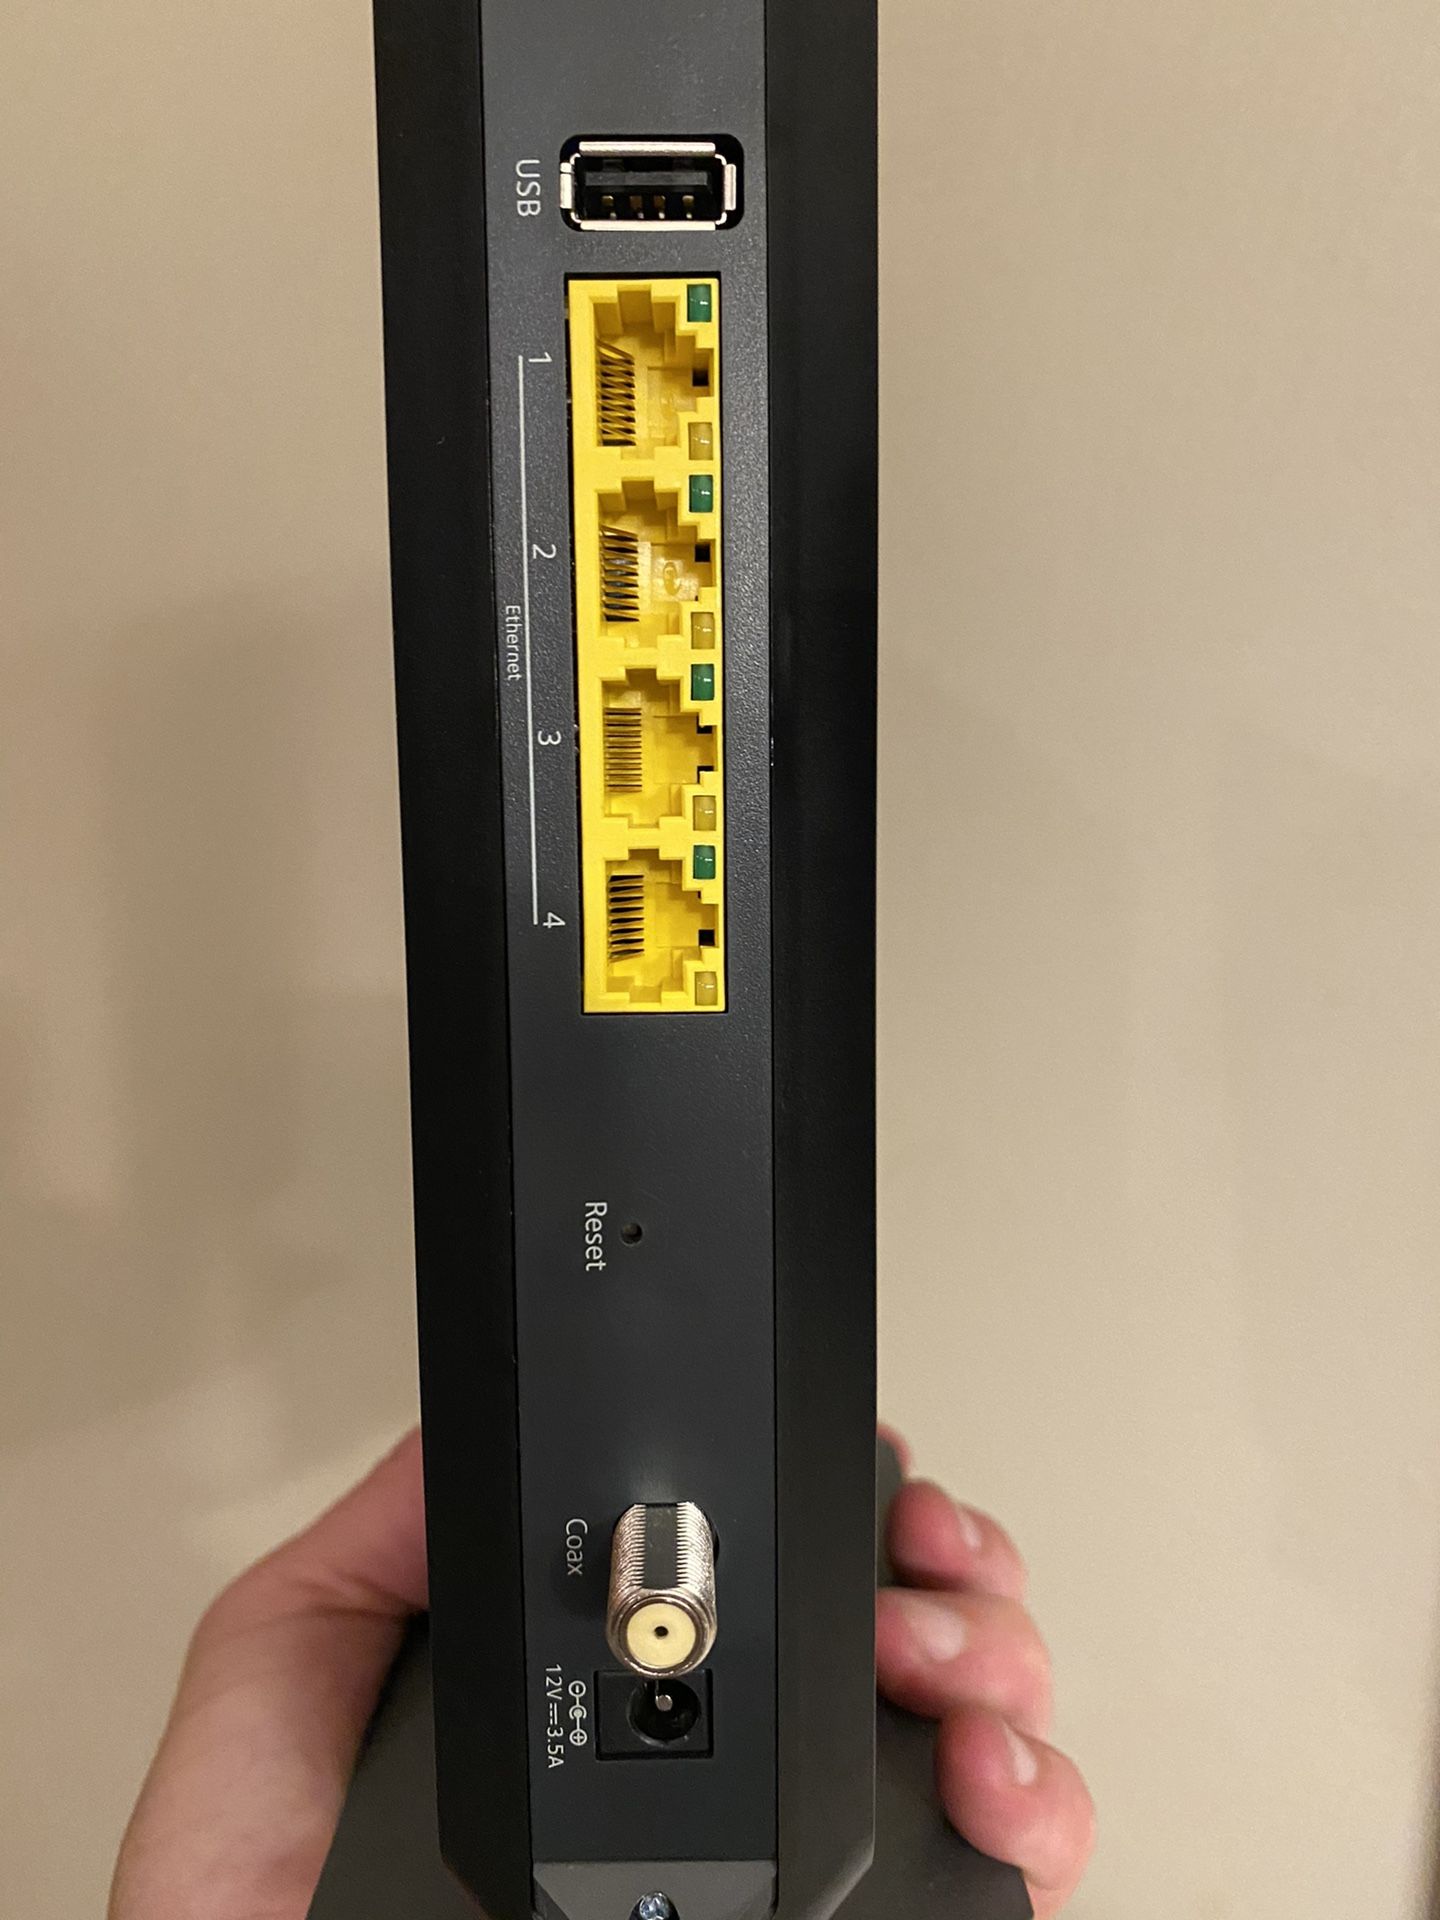 Netgear WIFi Cable Modem Router